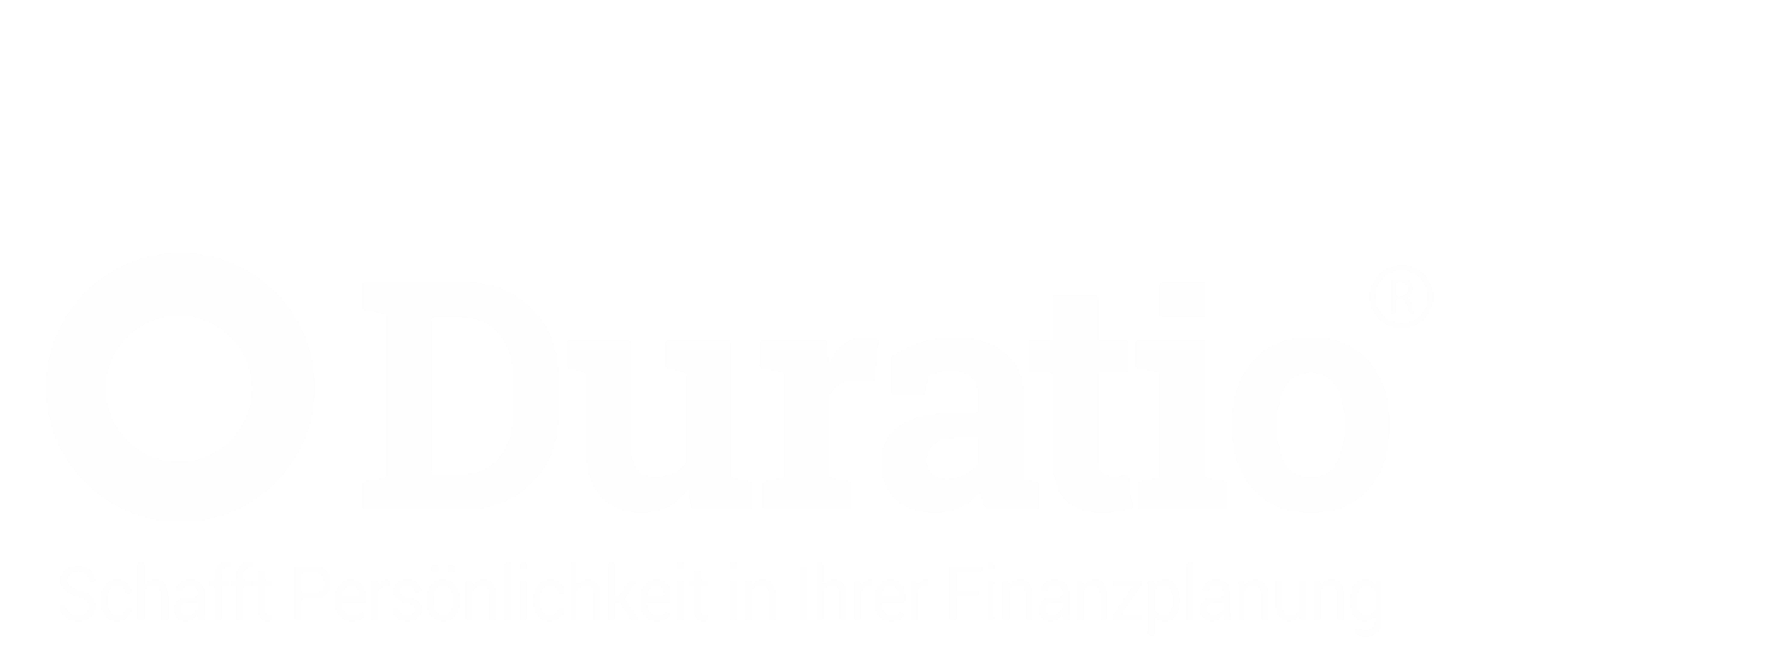 Duratio GmbH Logo weiß